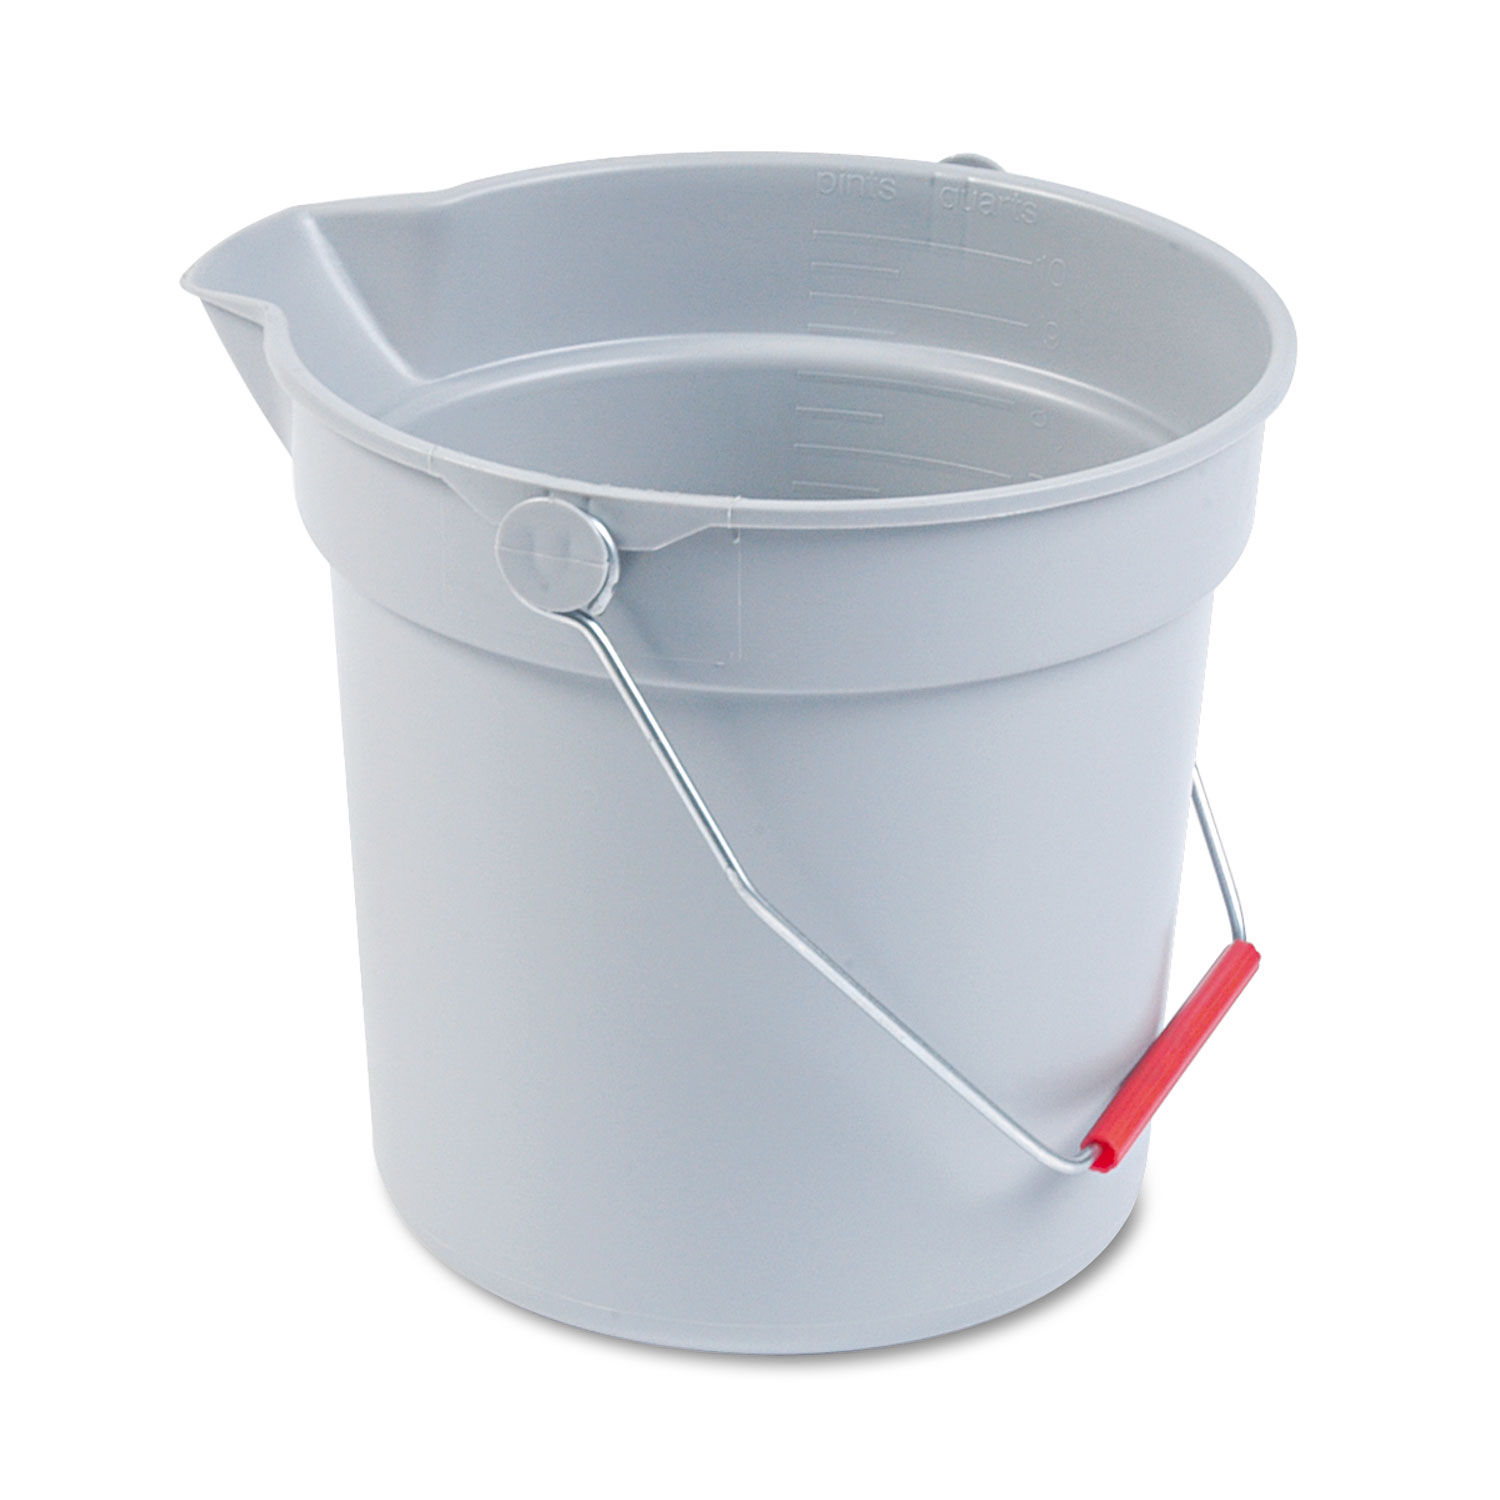 Rubbermaid Commercial FG296300GRAY Mop Bucket 10.5 x 10.25, 10 Quart  Capacity, Gray, Plastic, Round -1EA